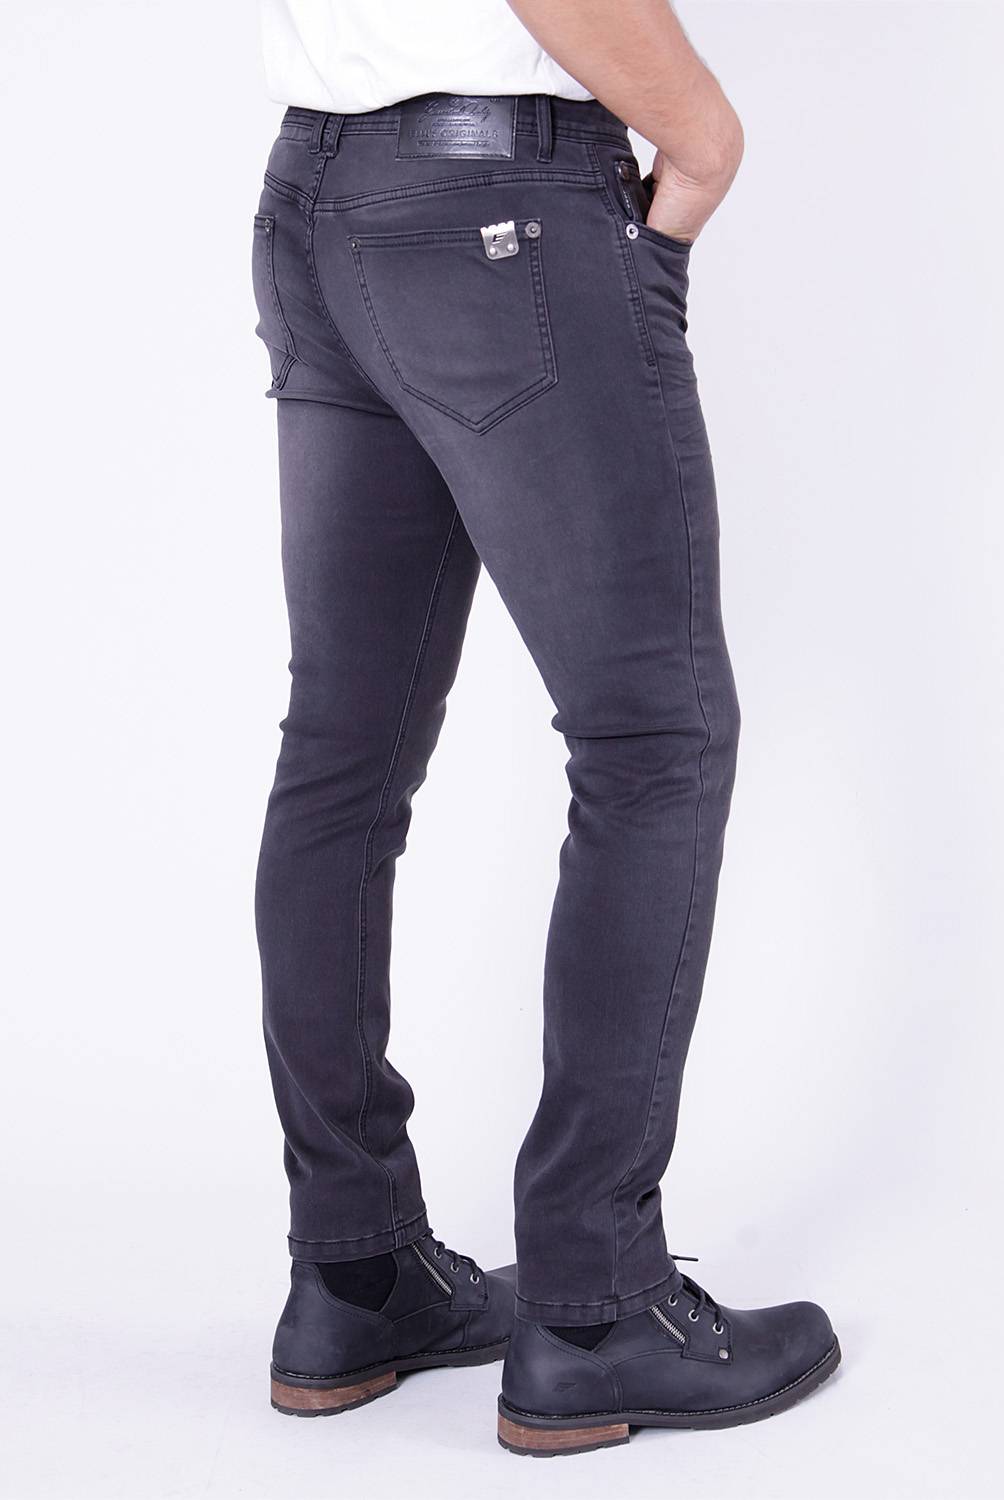 ELLUS NEGOCIO ESPECIAL - Ellus Negocio Especial Jeans Skinny Fit Algodón Hombre